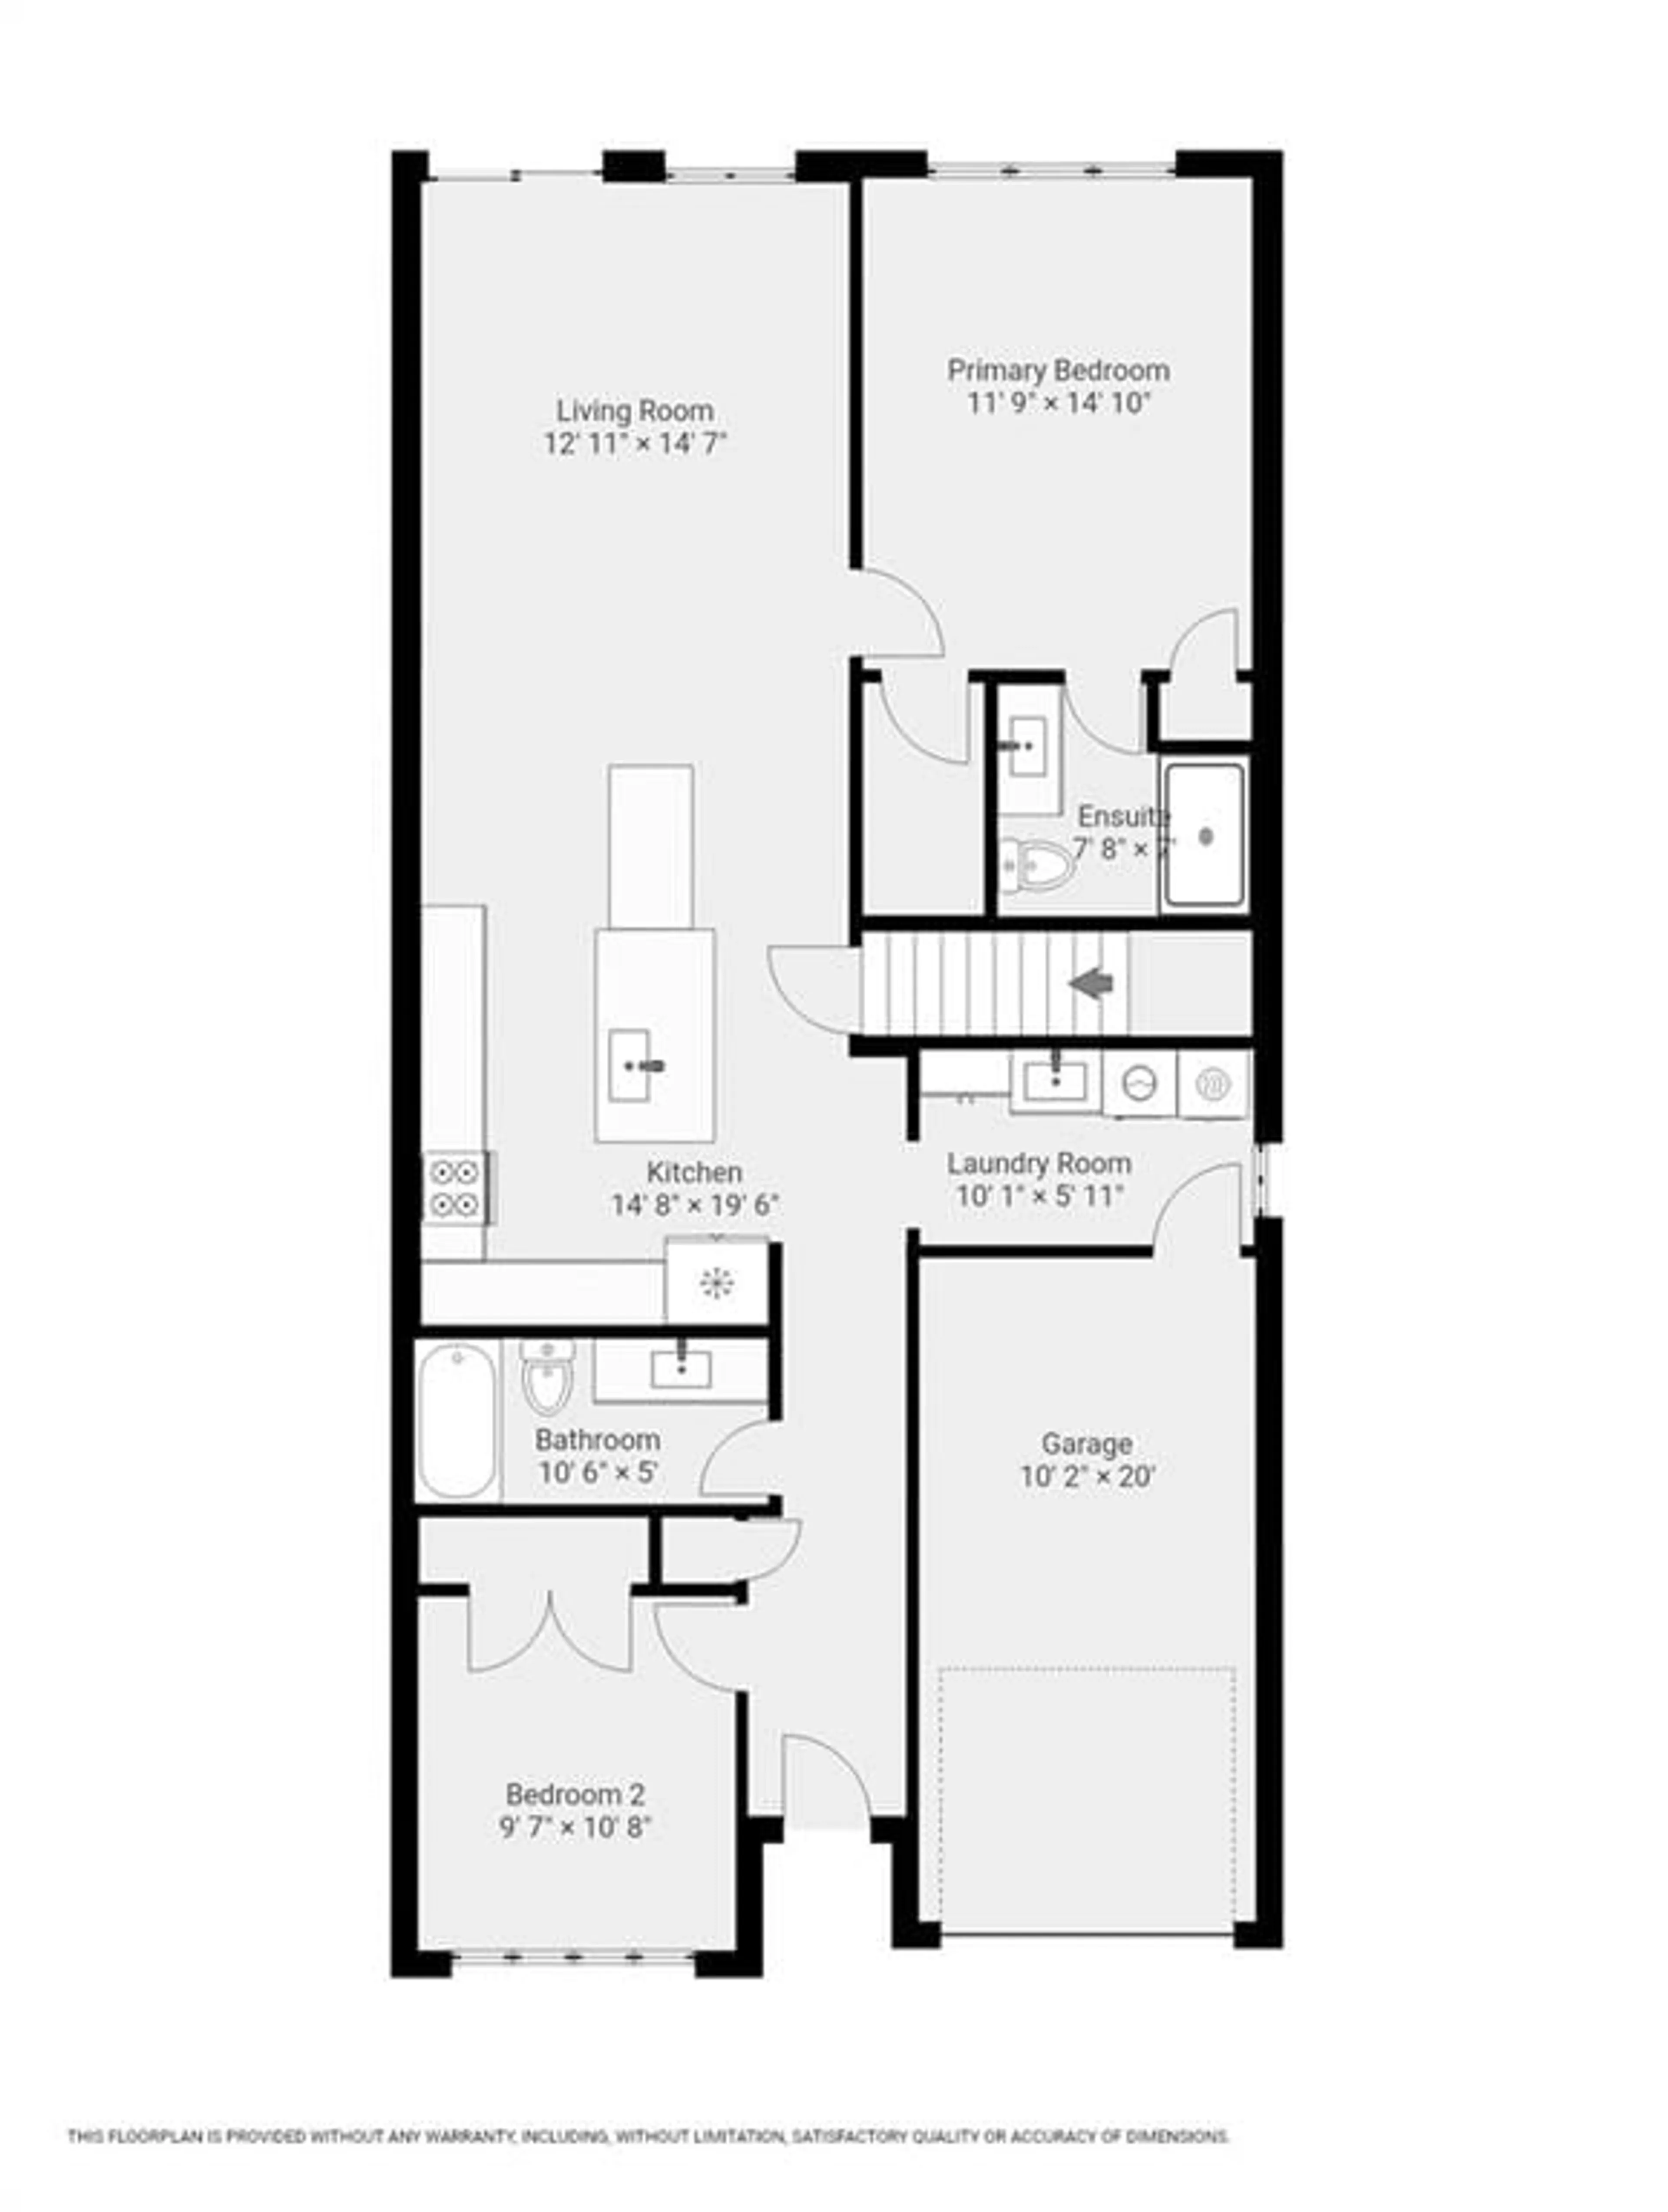 Floor plan for 97 Trafalgar Dr, Stoney Creek Ontario L8J 0E5